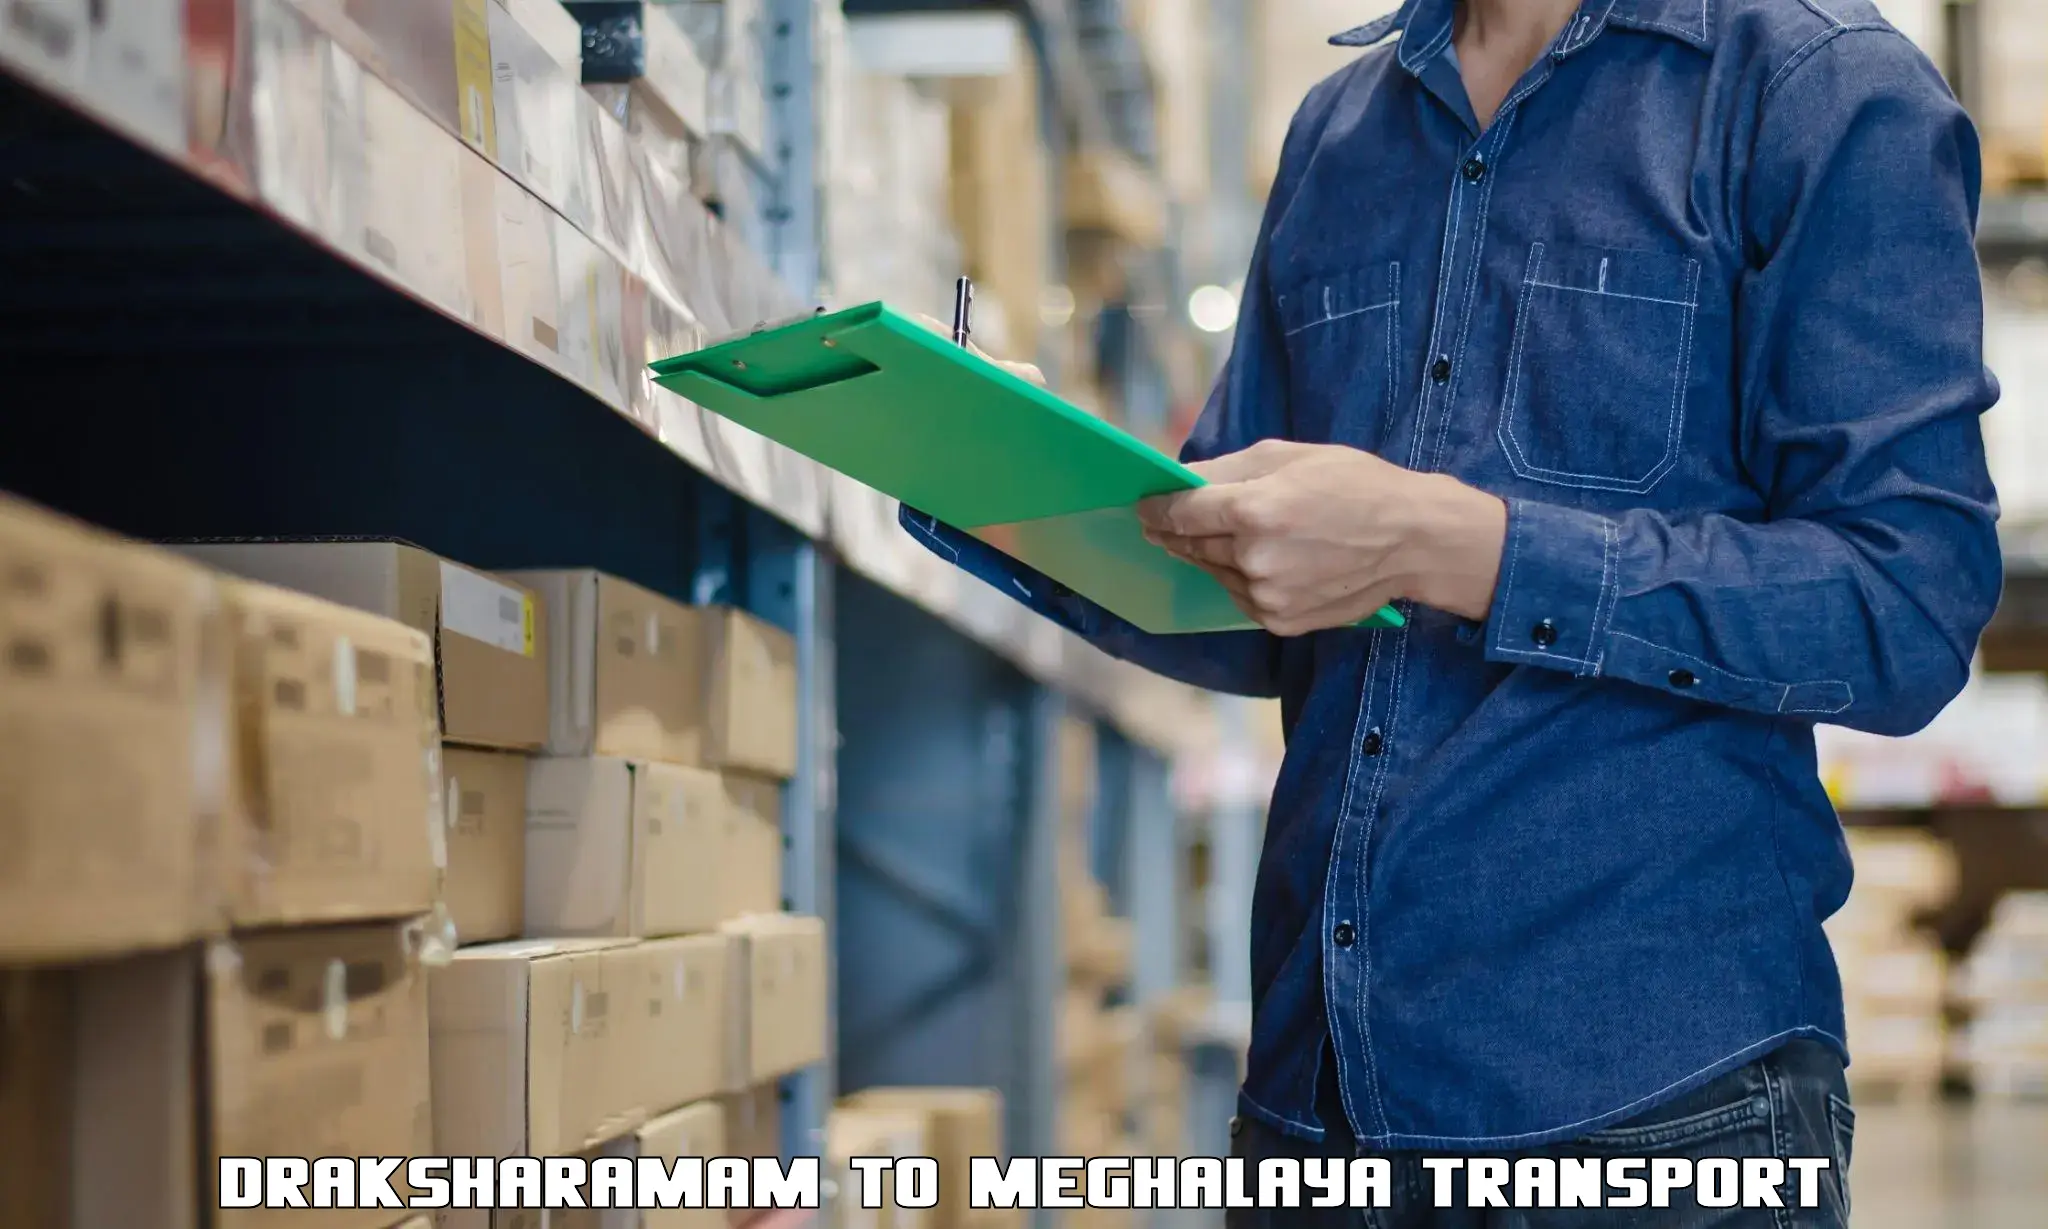 Truck transport companies in India Draksharamam to Meghalaya